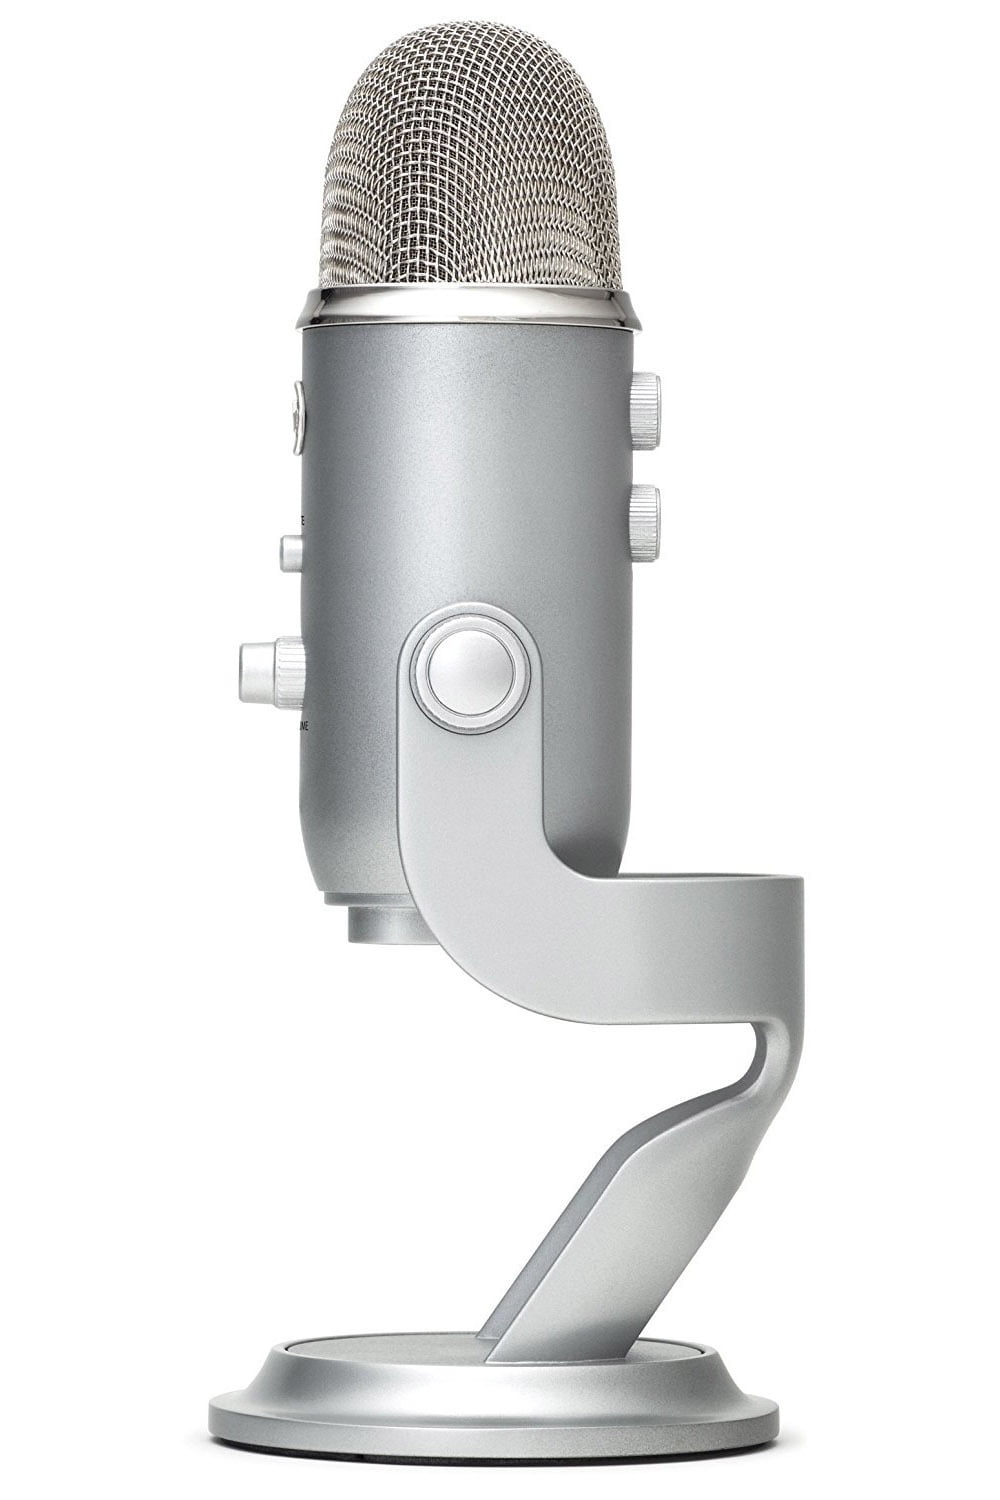 Blue Microphones Yeti Blackout - Microphone - LDLC 3-year warranty